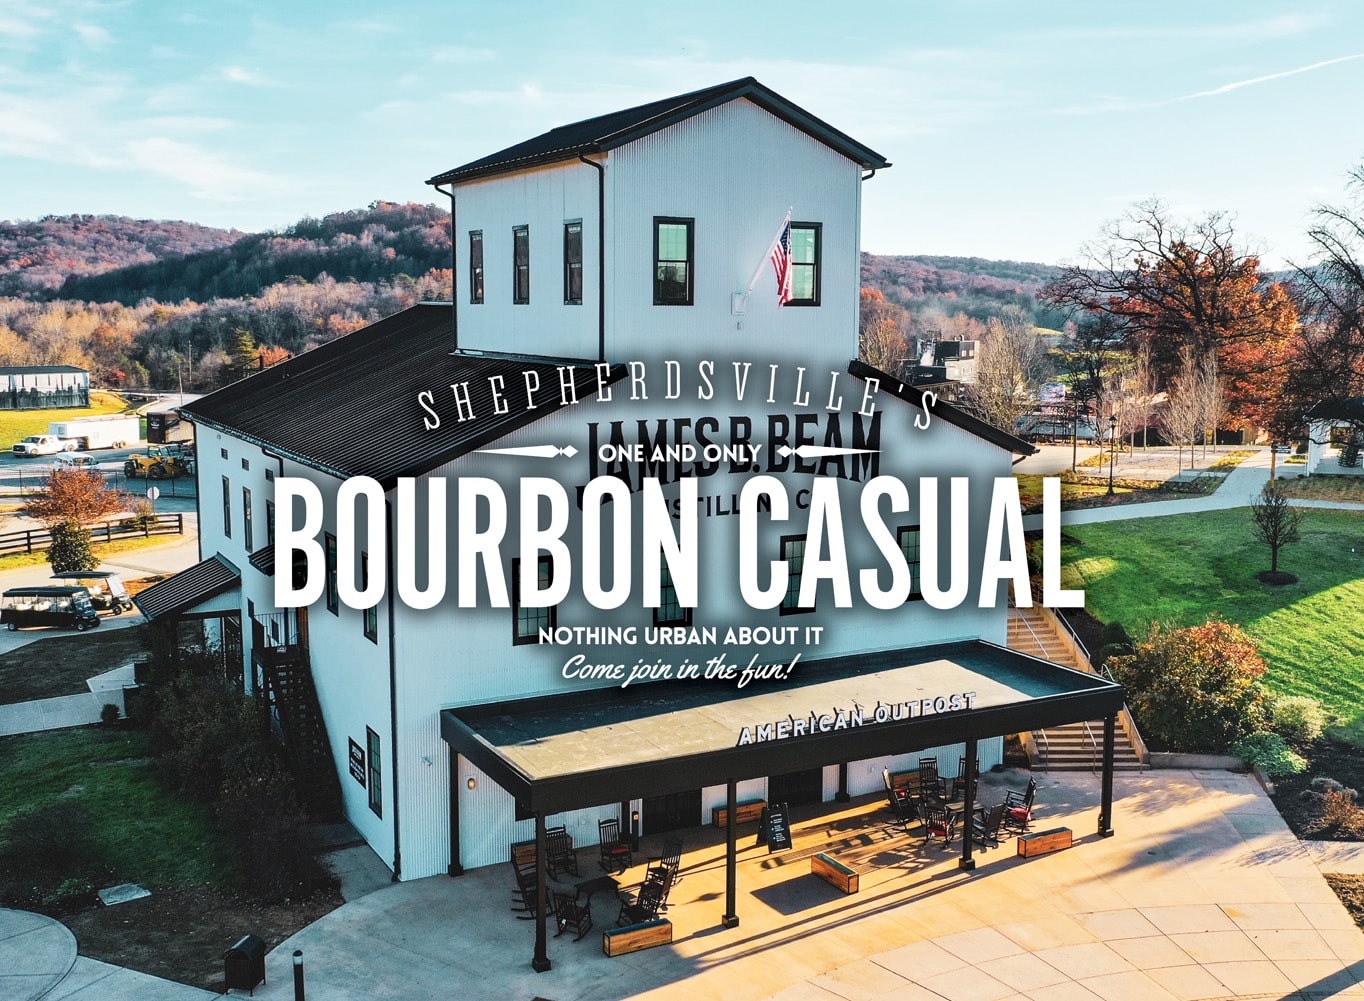 Website banner showcasing Bourbon Casual